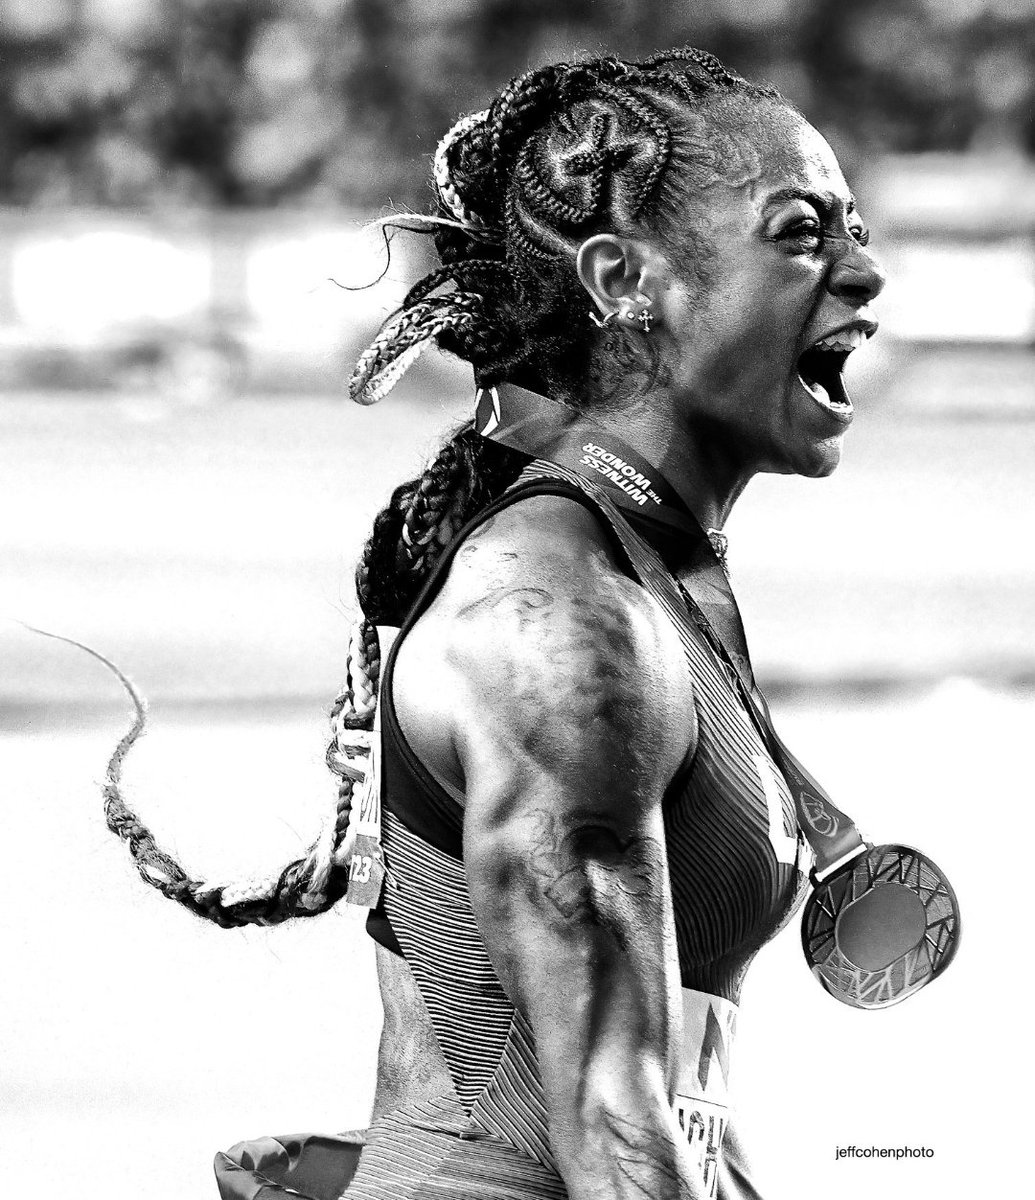 📸 - @TrackFieldImage / @jeffcohenphoto 

👩🏾 - @itskerrii 🇺🇸

'World 100m Champion' 

#ThisIsTrackandField #CreatingContent #TFN